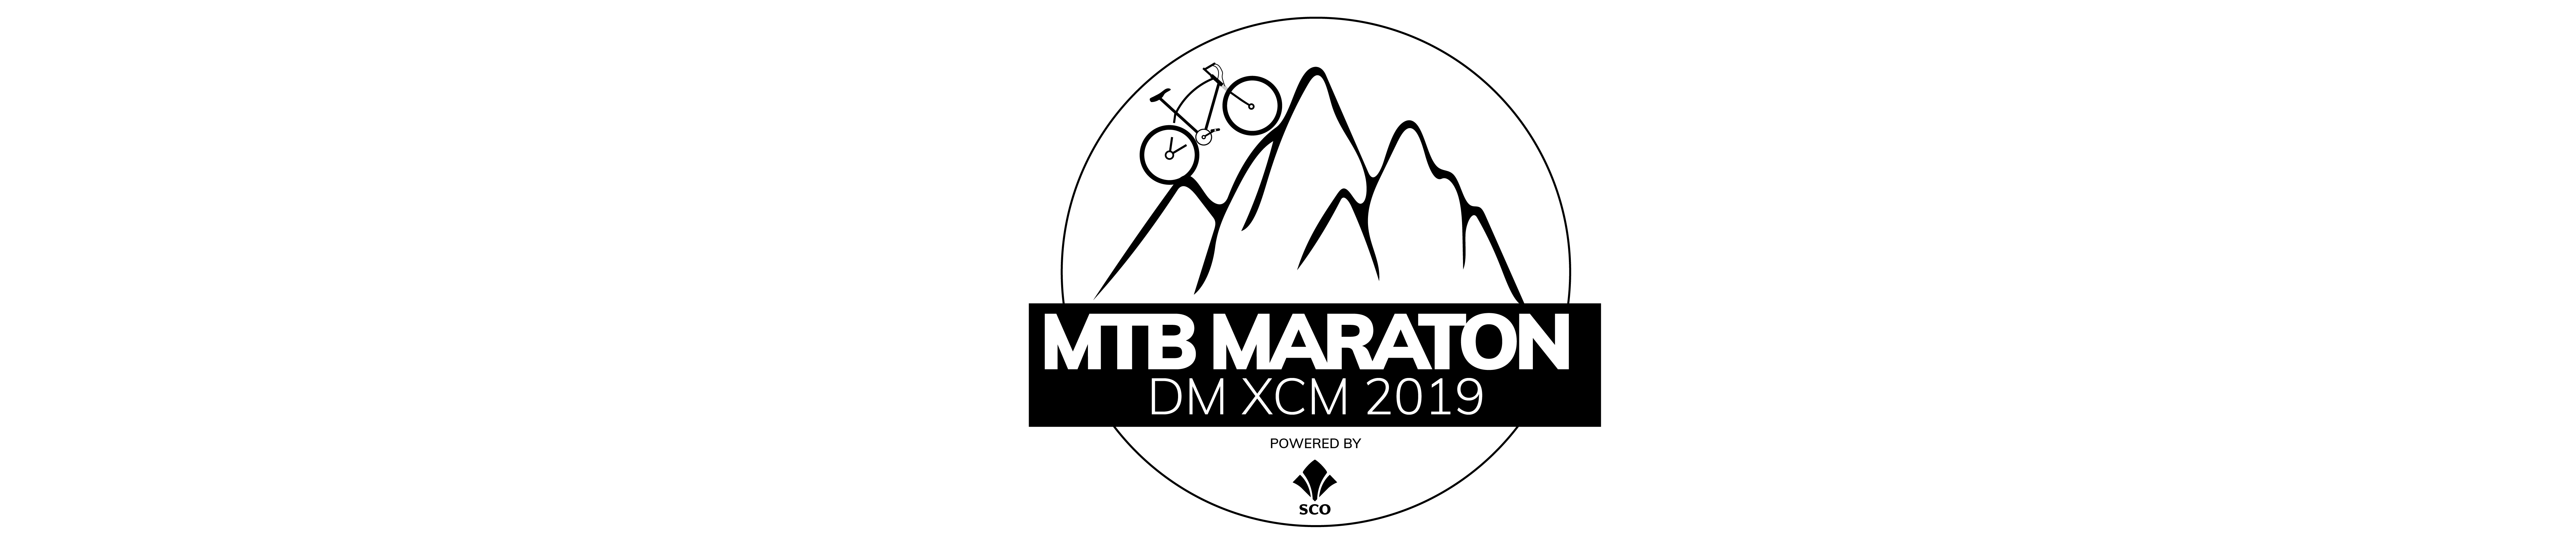 DM XCM 2019 - Aarhus MTB